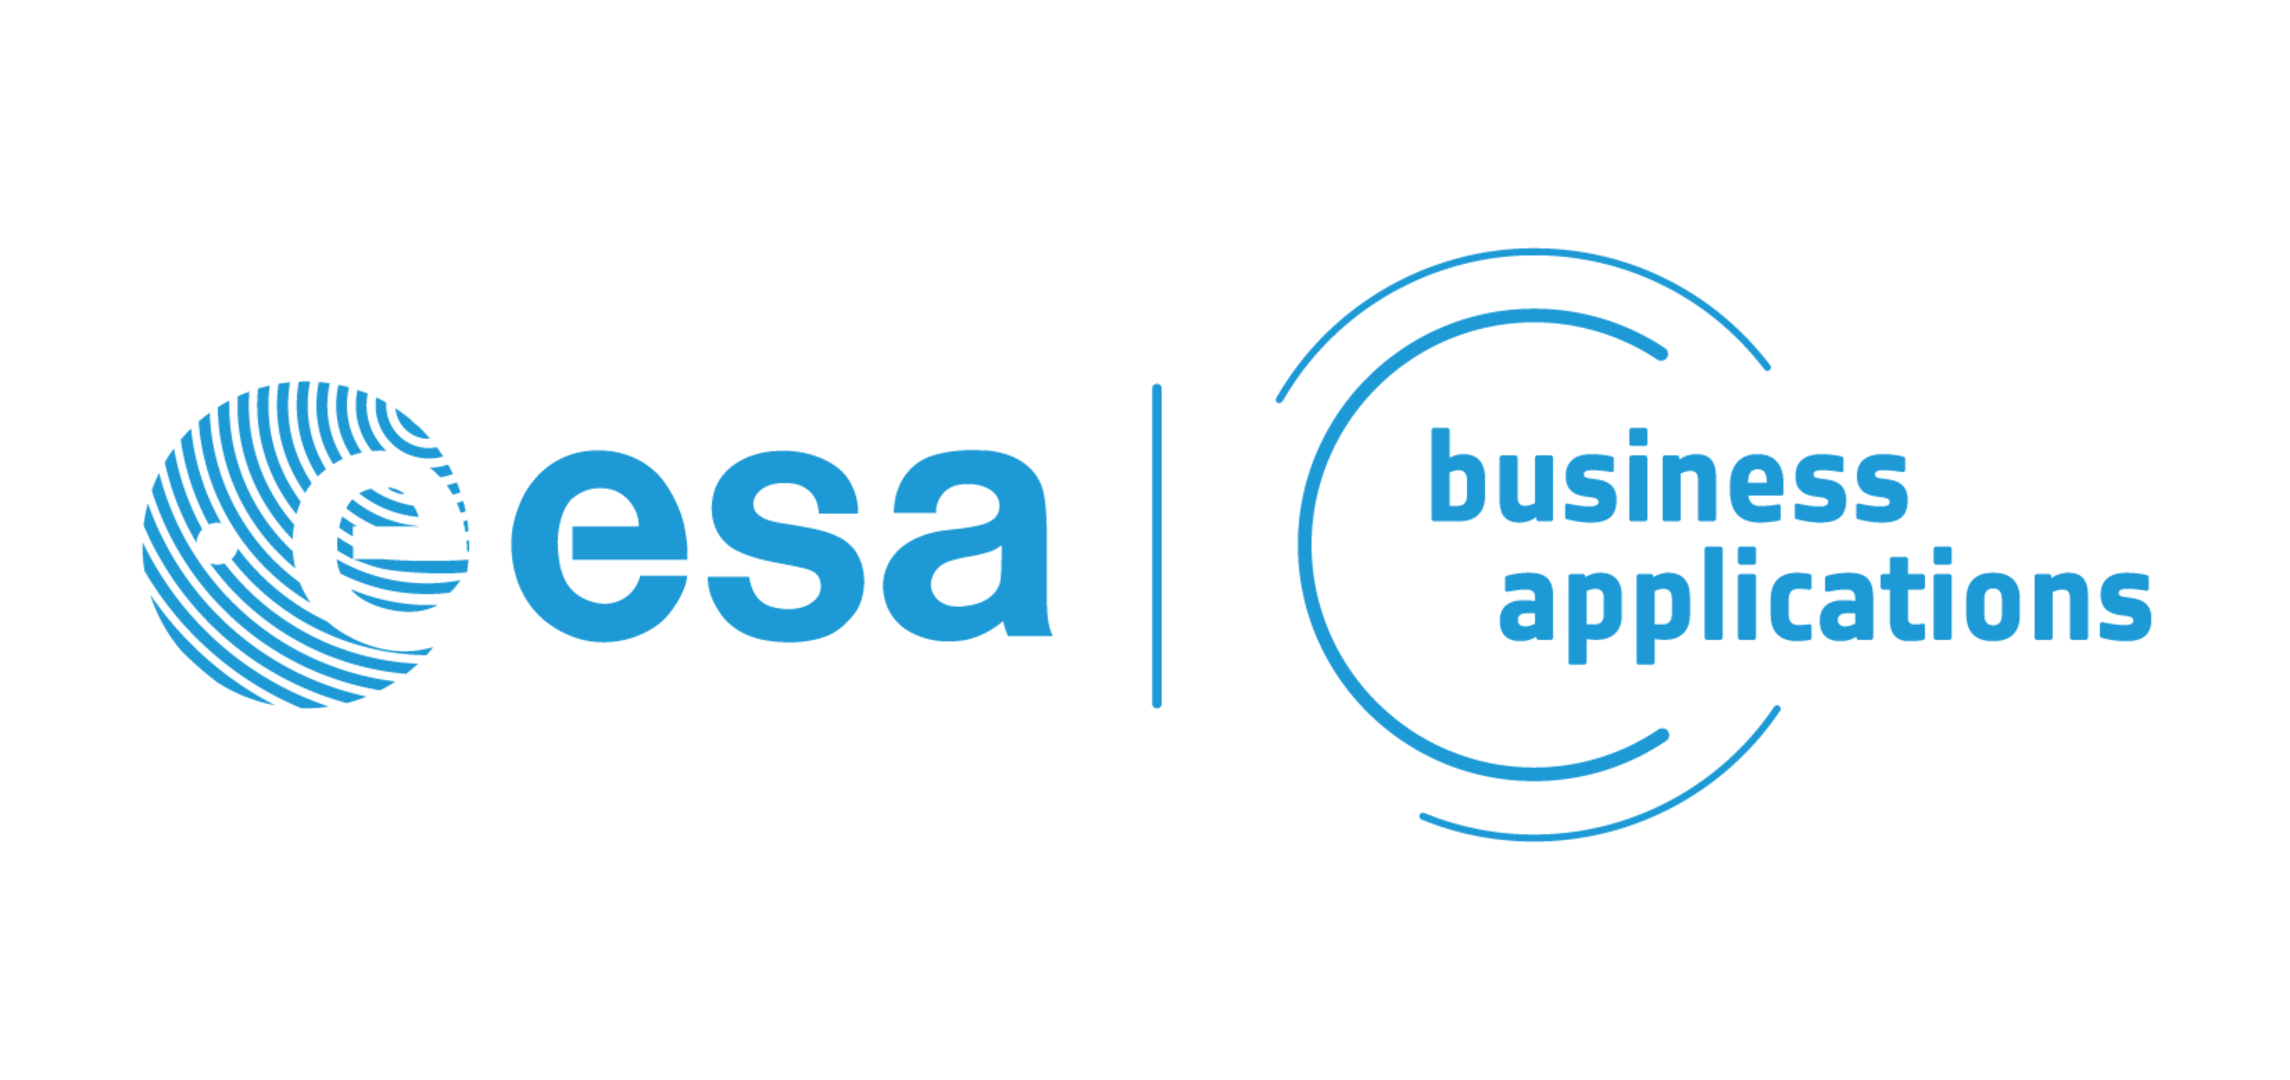 Business Applications logo